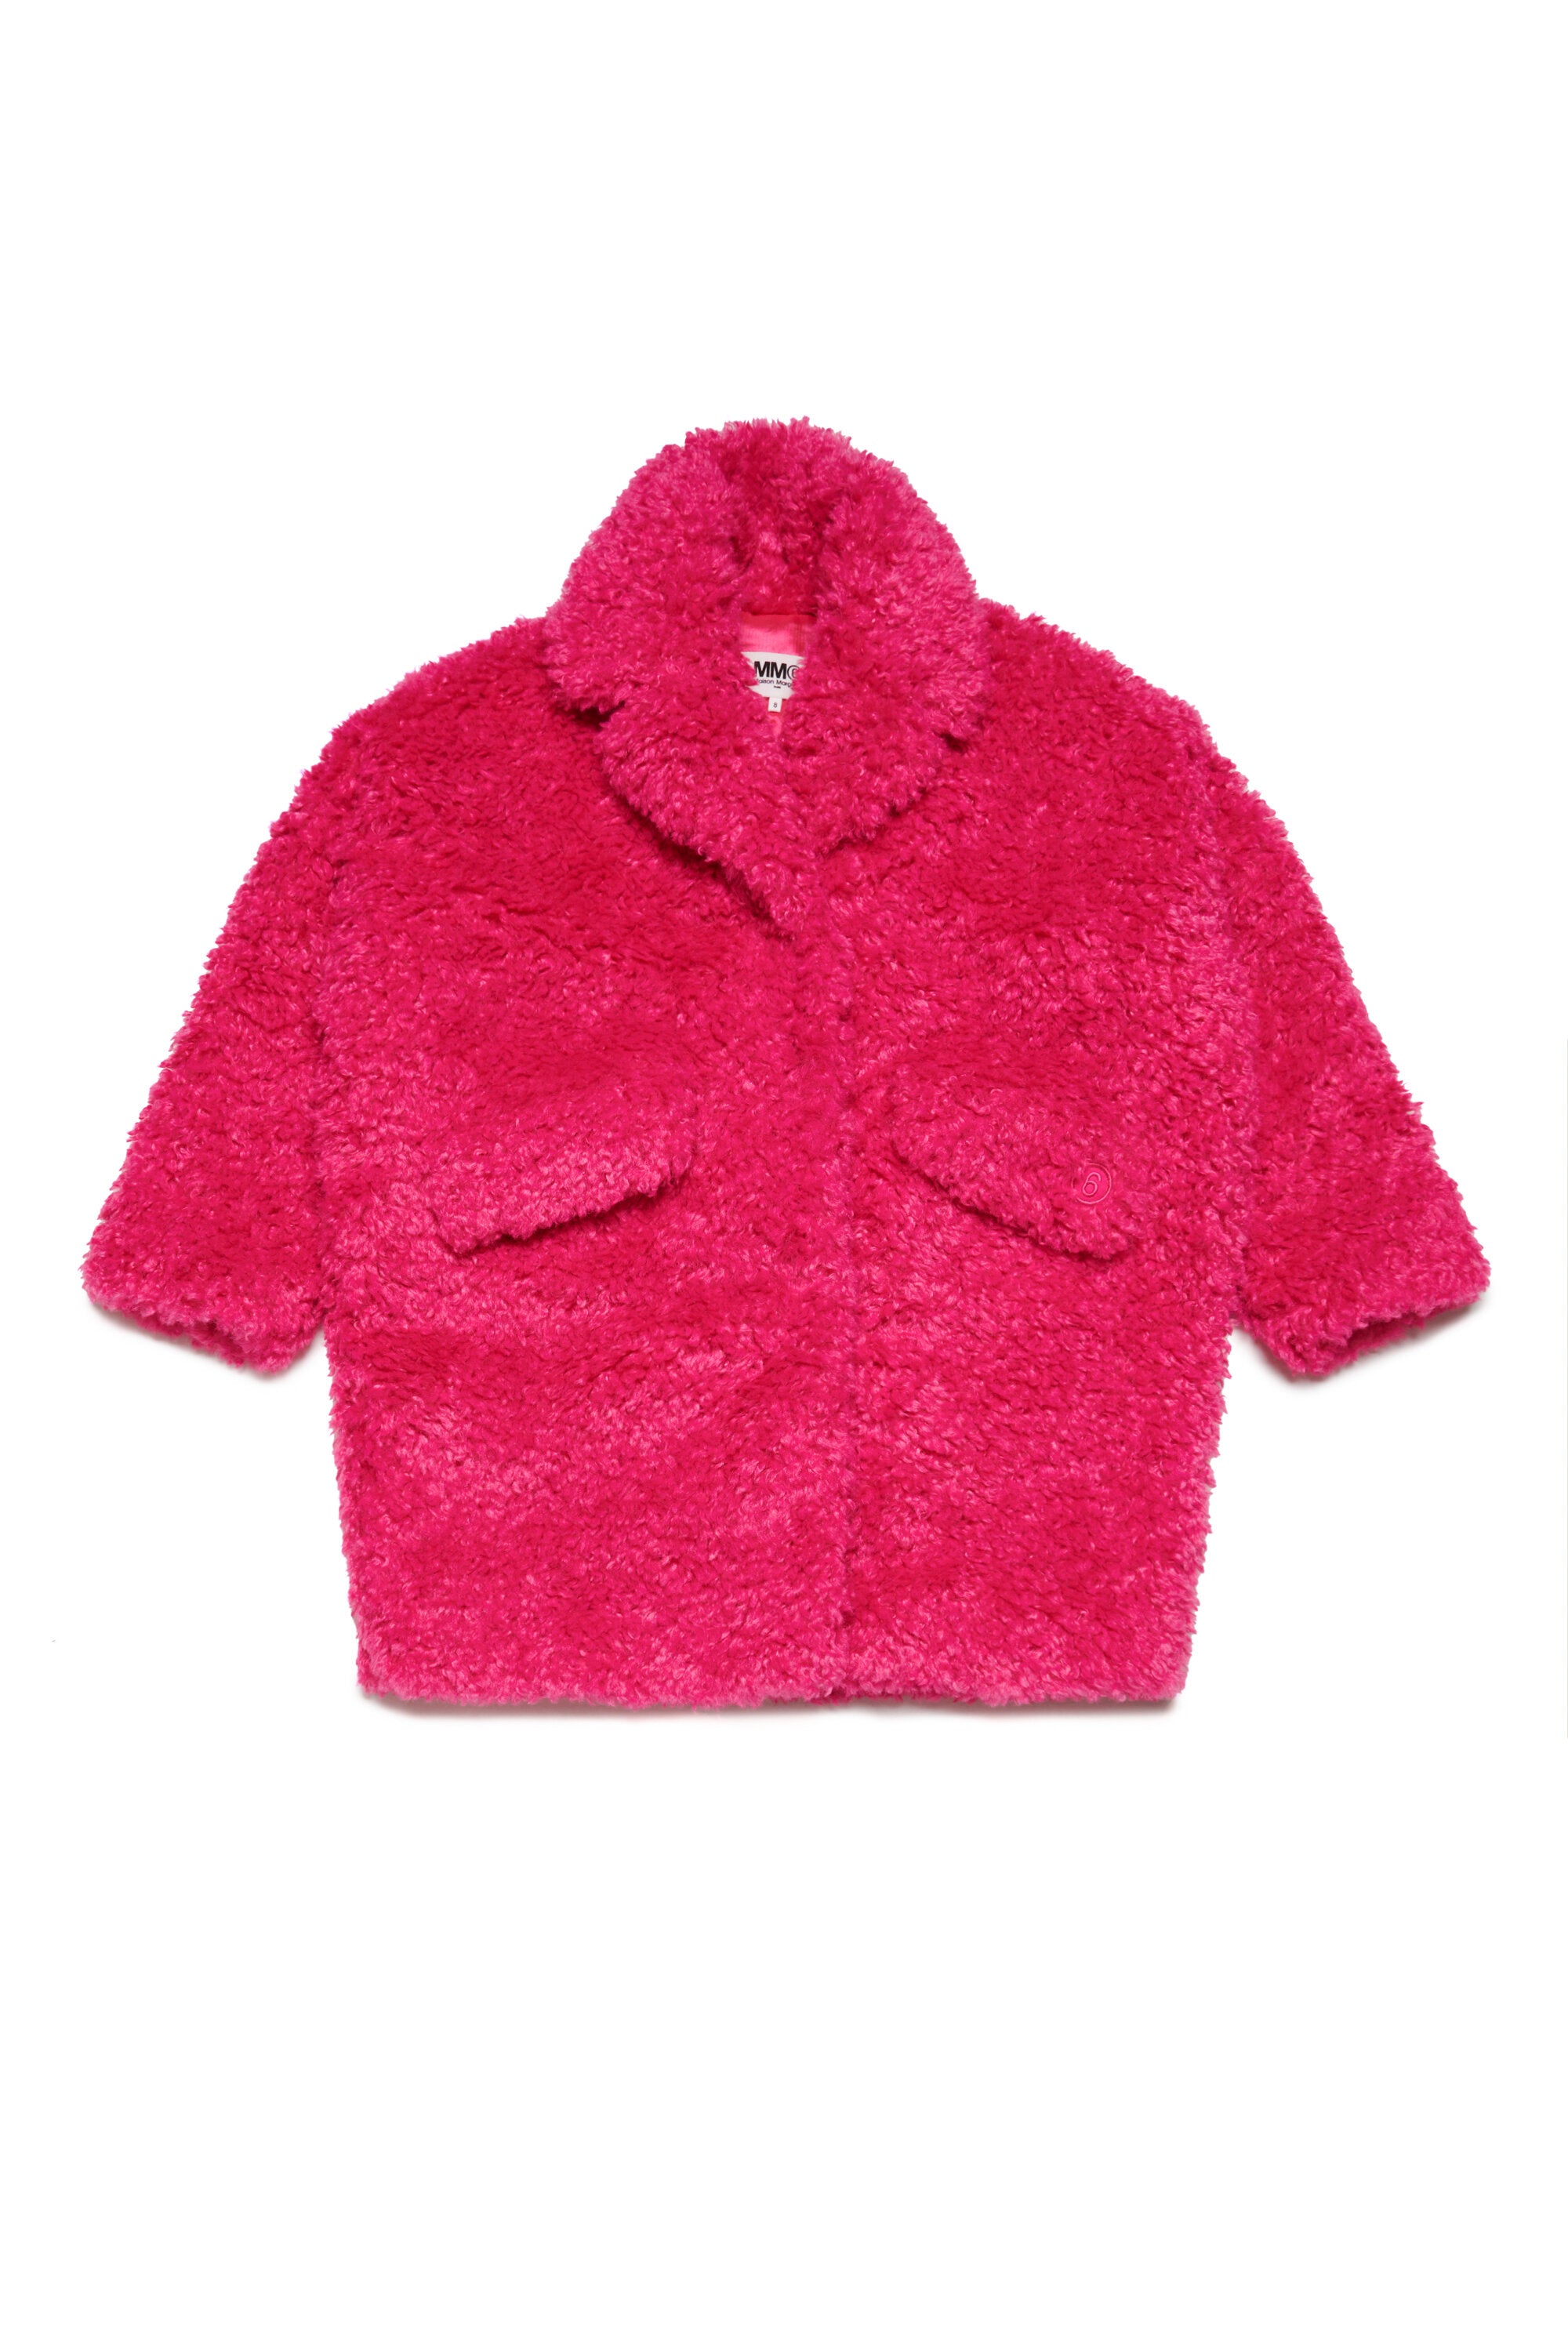 MM6 teen faux fur teddy coat | BRAVE KID